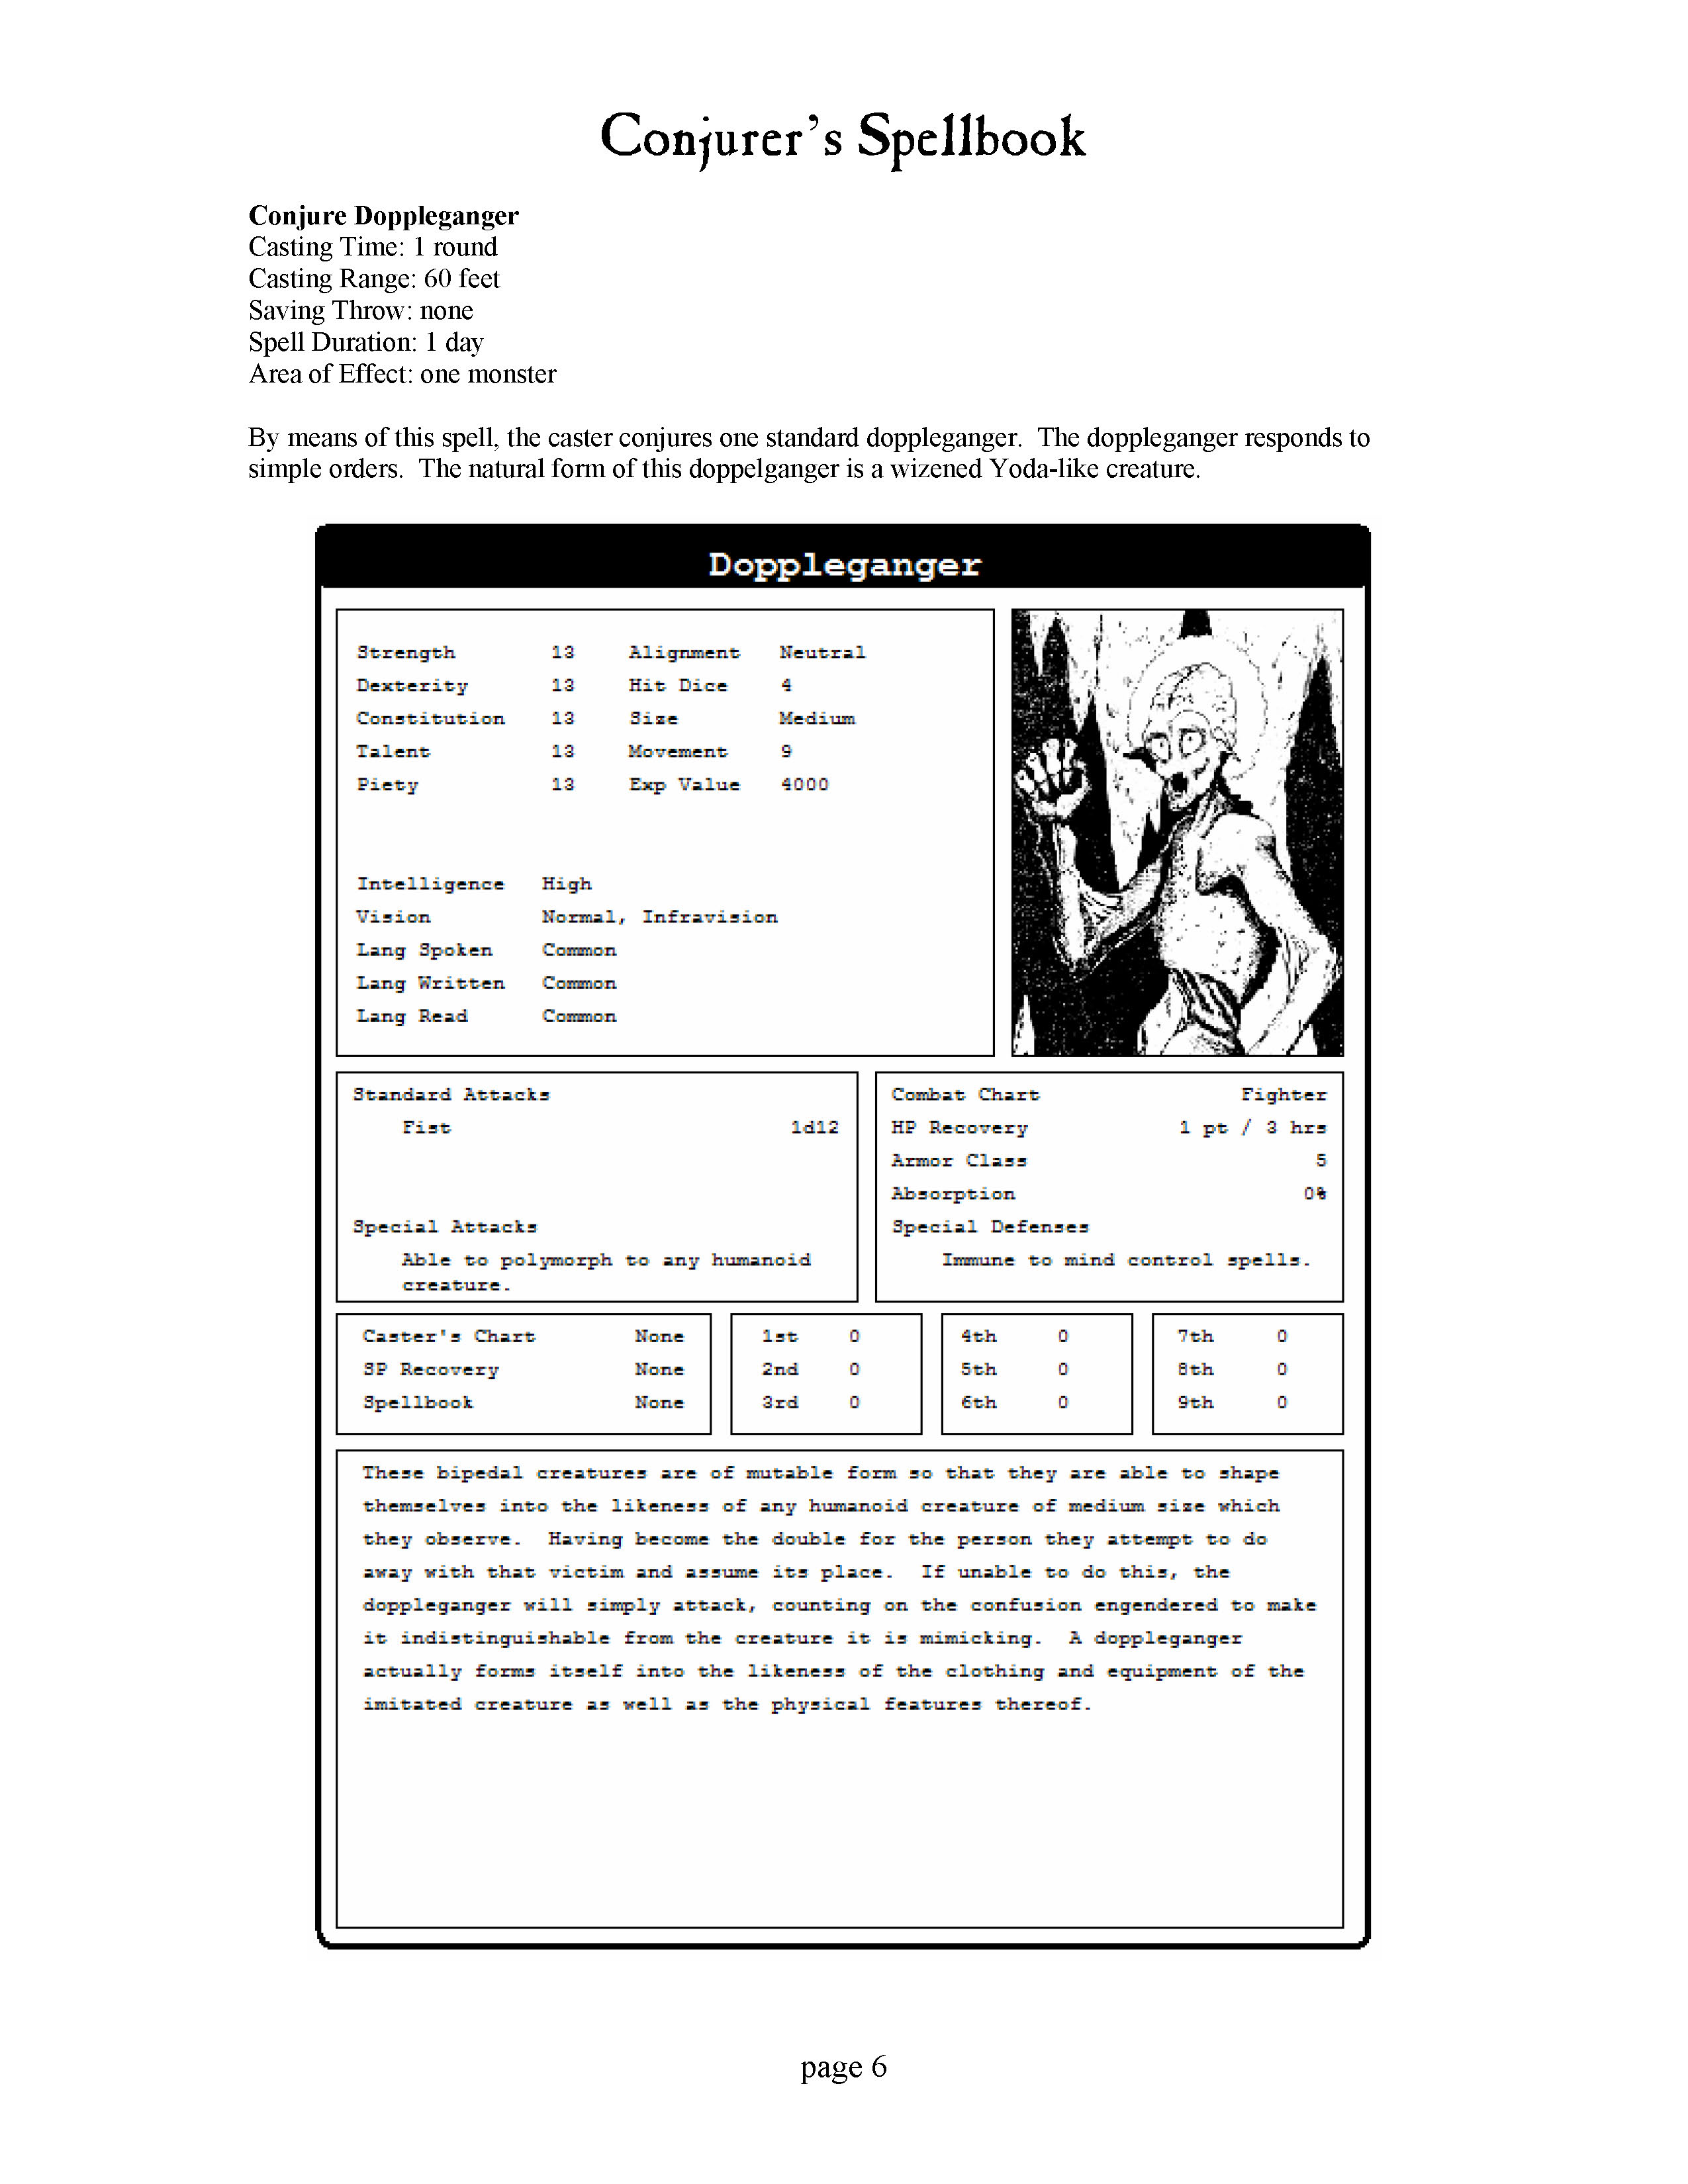 Conjurers Spellbook v8.1 Page 06.jpg